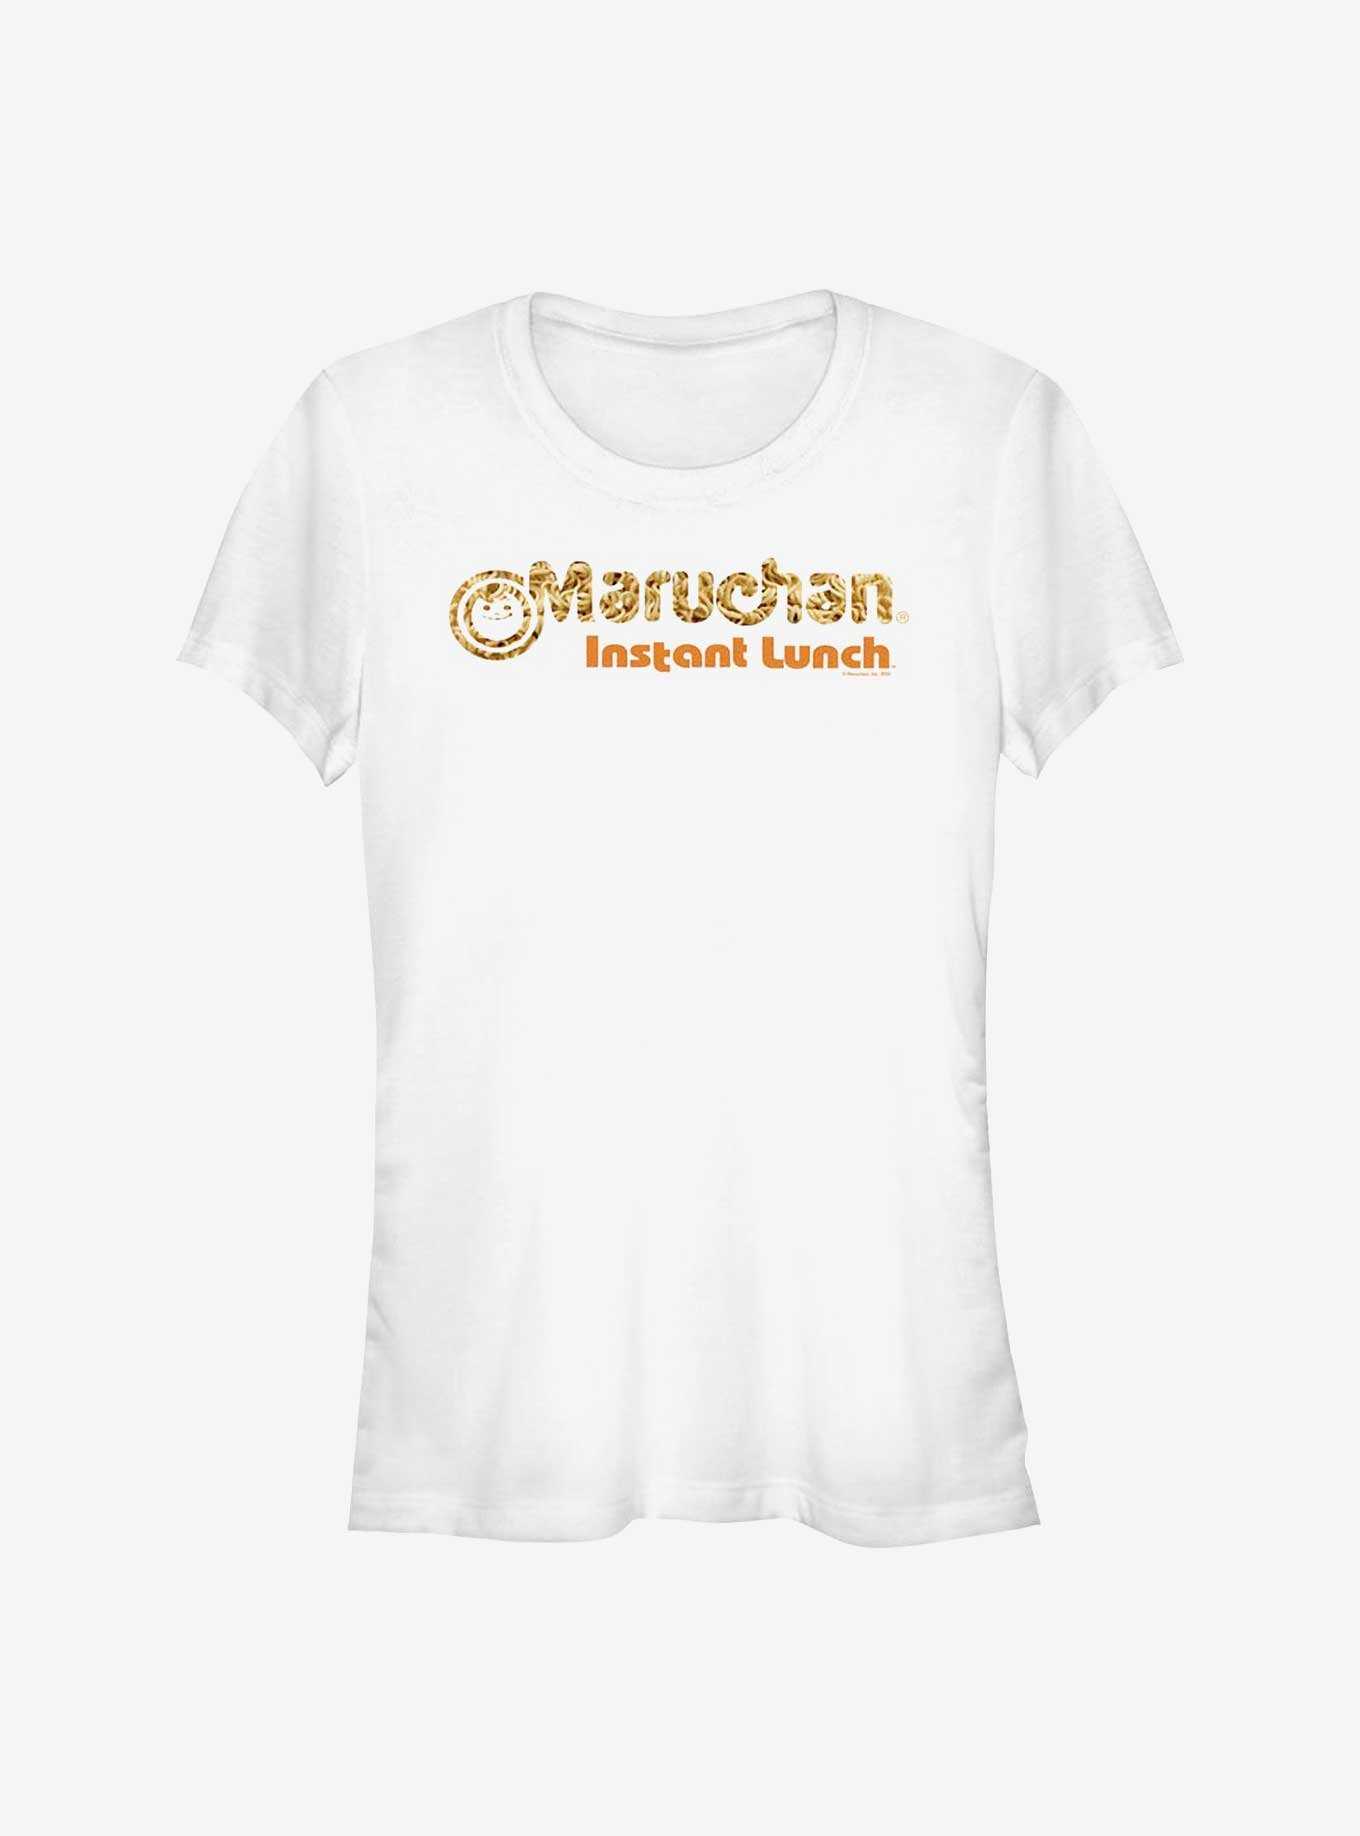 Maruchan Noodle Text Girls T-Shirt, , hi-res